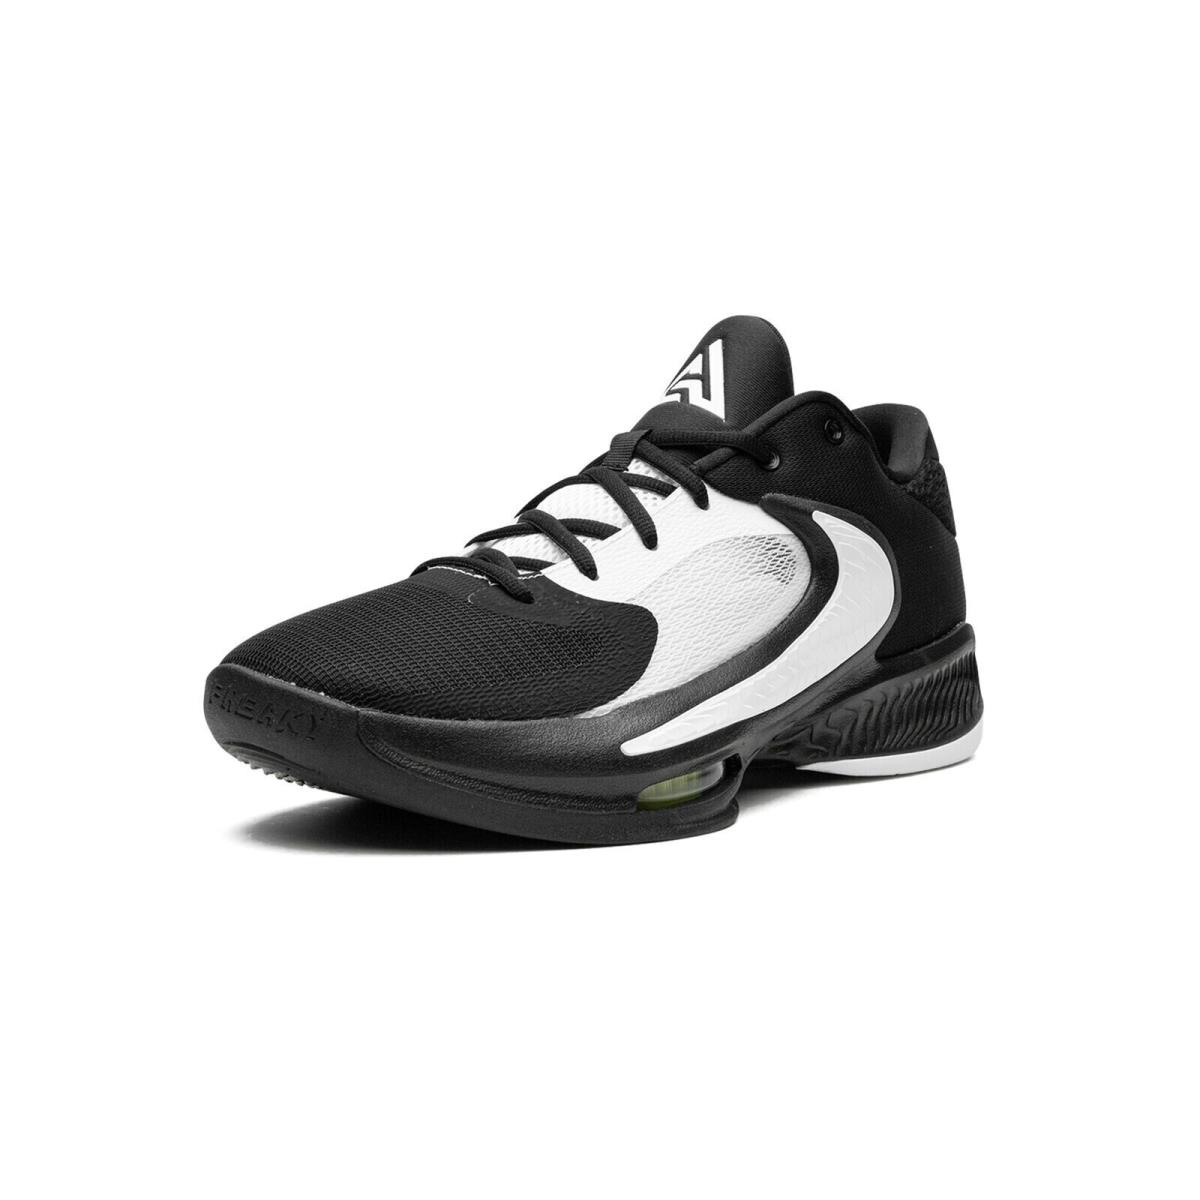 Nike Mens Zoom Freak 4 TB Basketball Shoes Size 11.5 Box NO Lid DO9679 002 - black /white -black